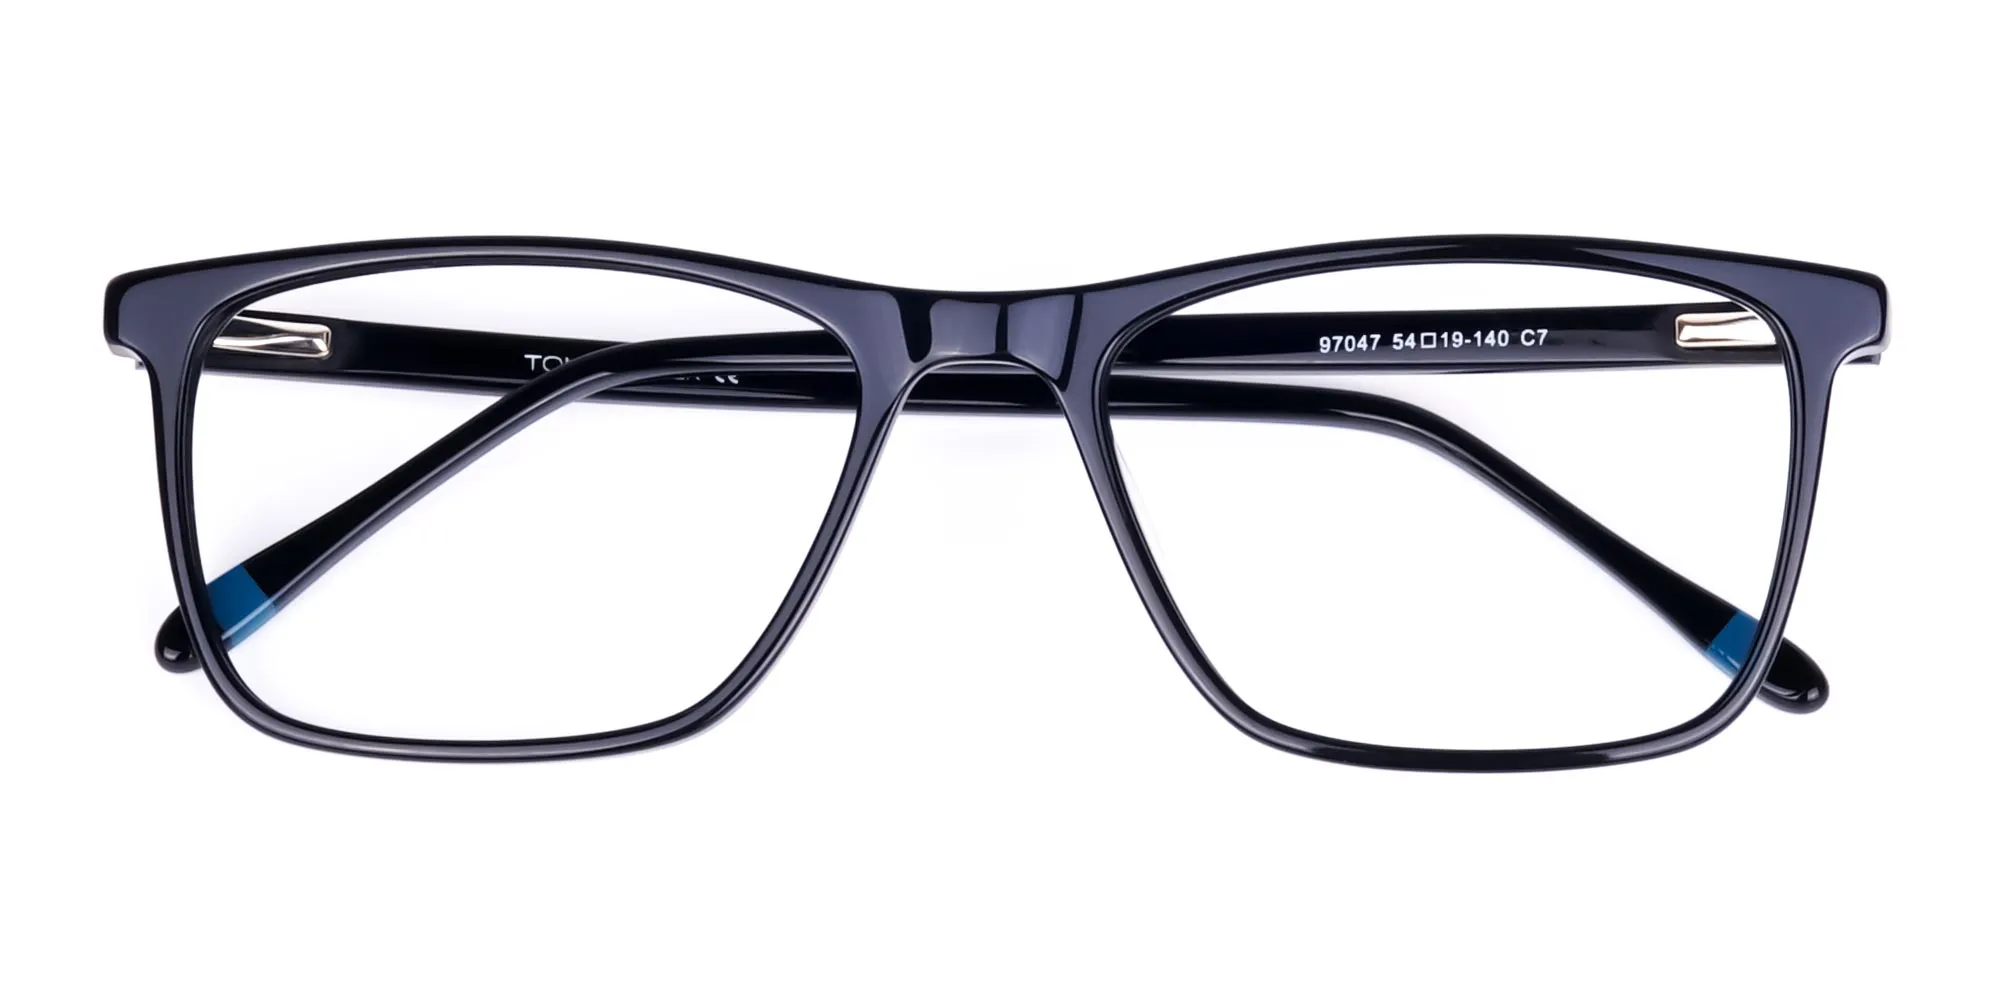 Teal and Black Rectangle Eyeglasses-2